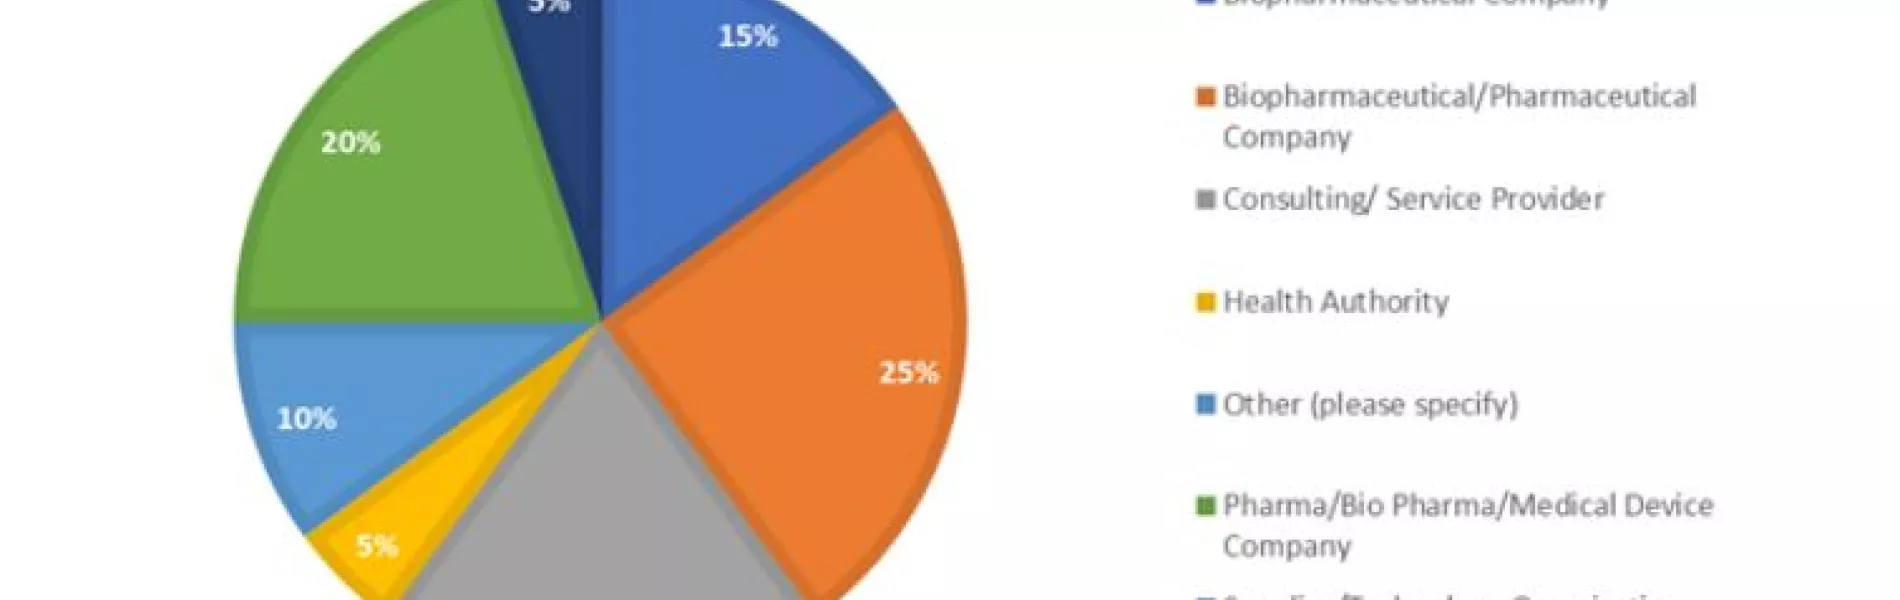 Organization demographics of survey respondents; n = 25, with 20 unique organizations